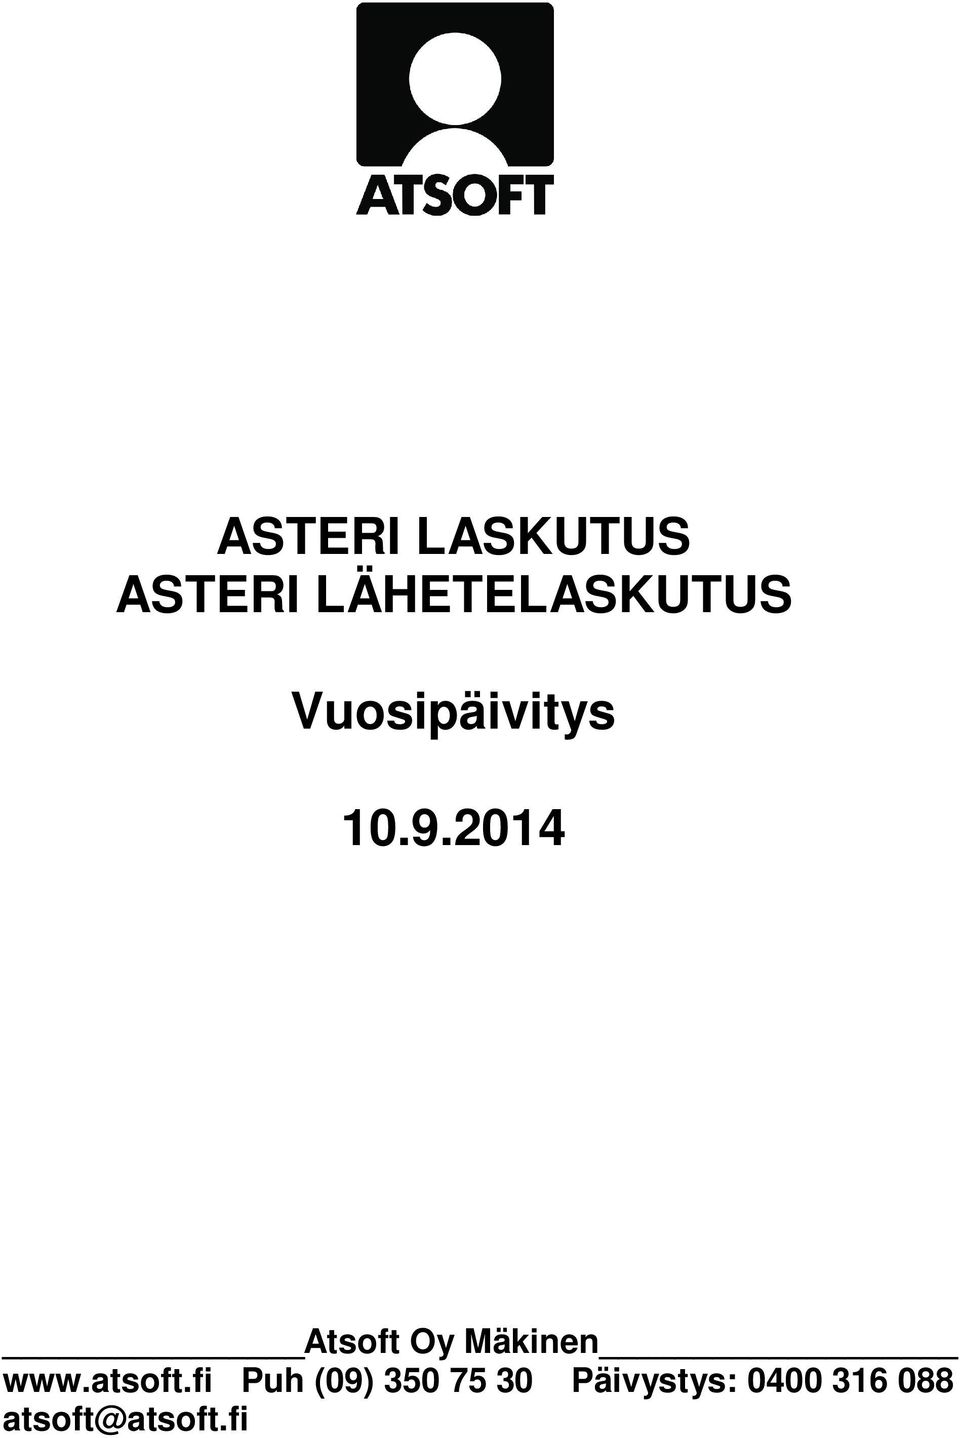 2014 Atsoft Oy Mäkinen www.atsoft.